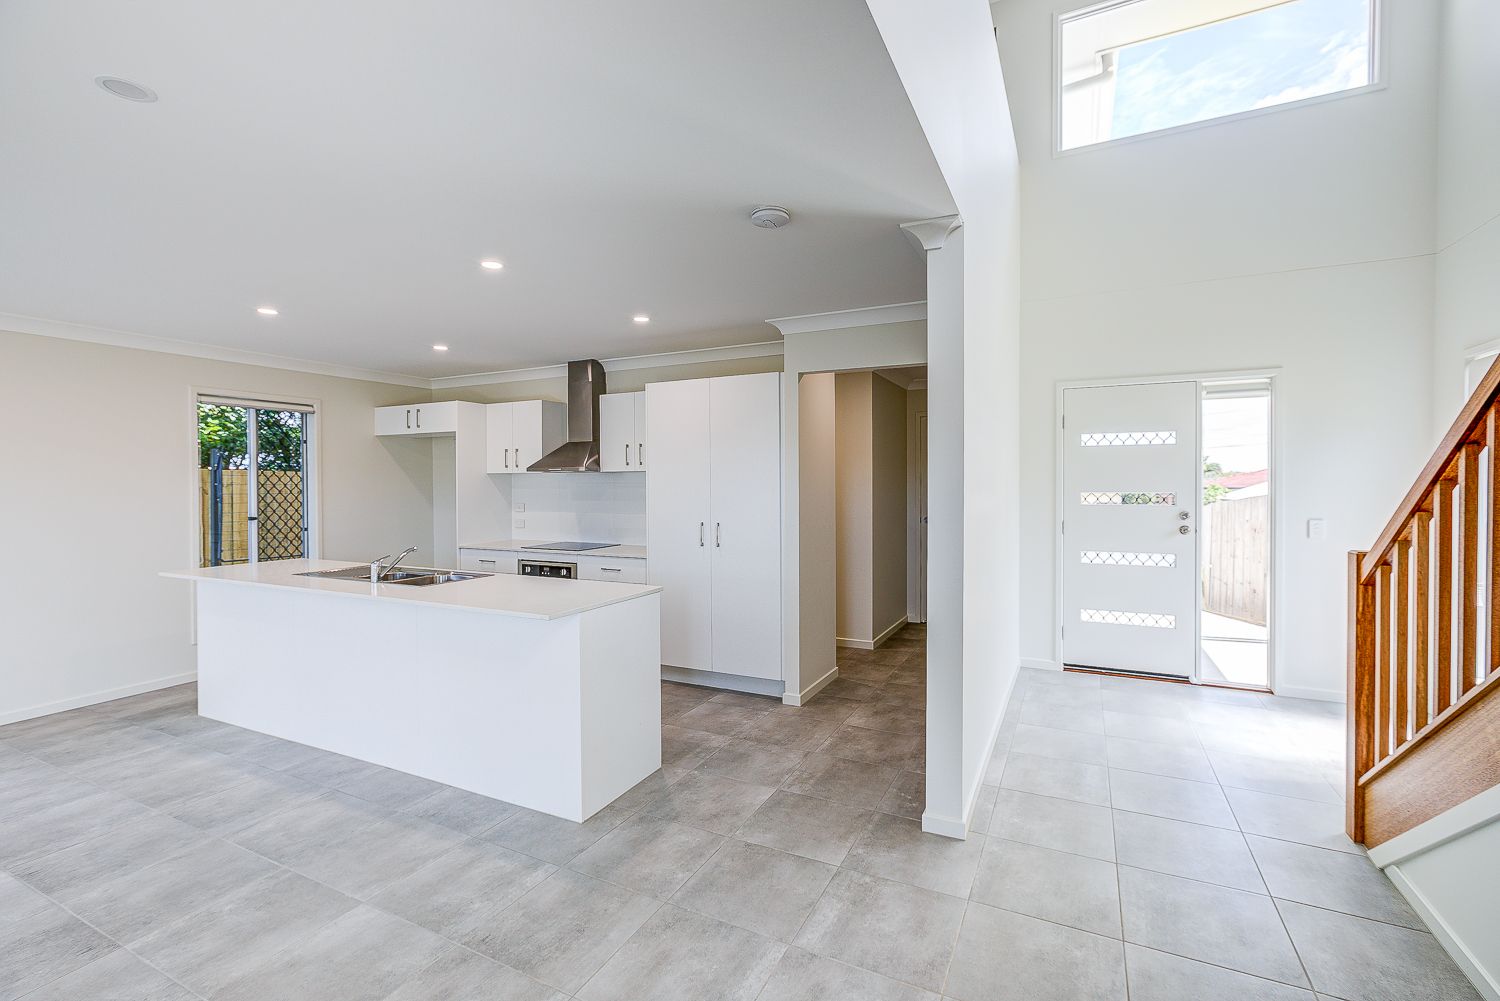 8A Kana Crescent, Slacks Creek QLD 4127 - House For Rent | Domain